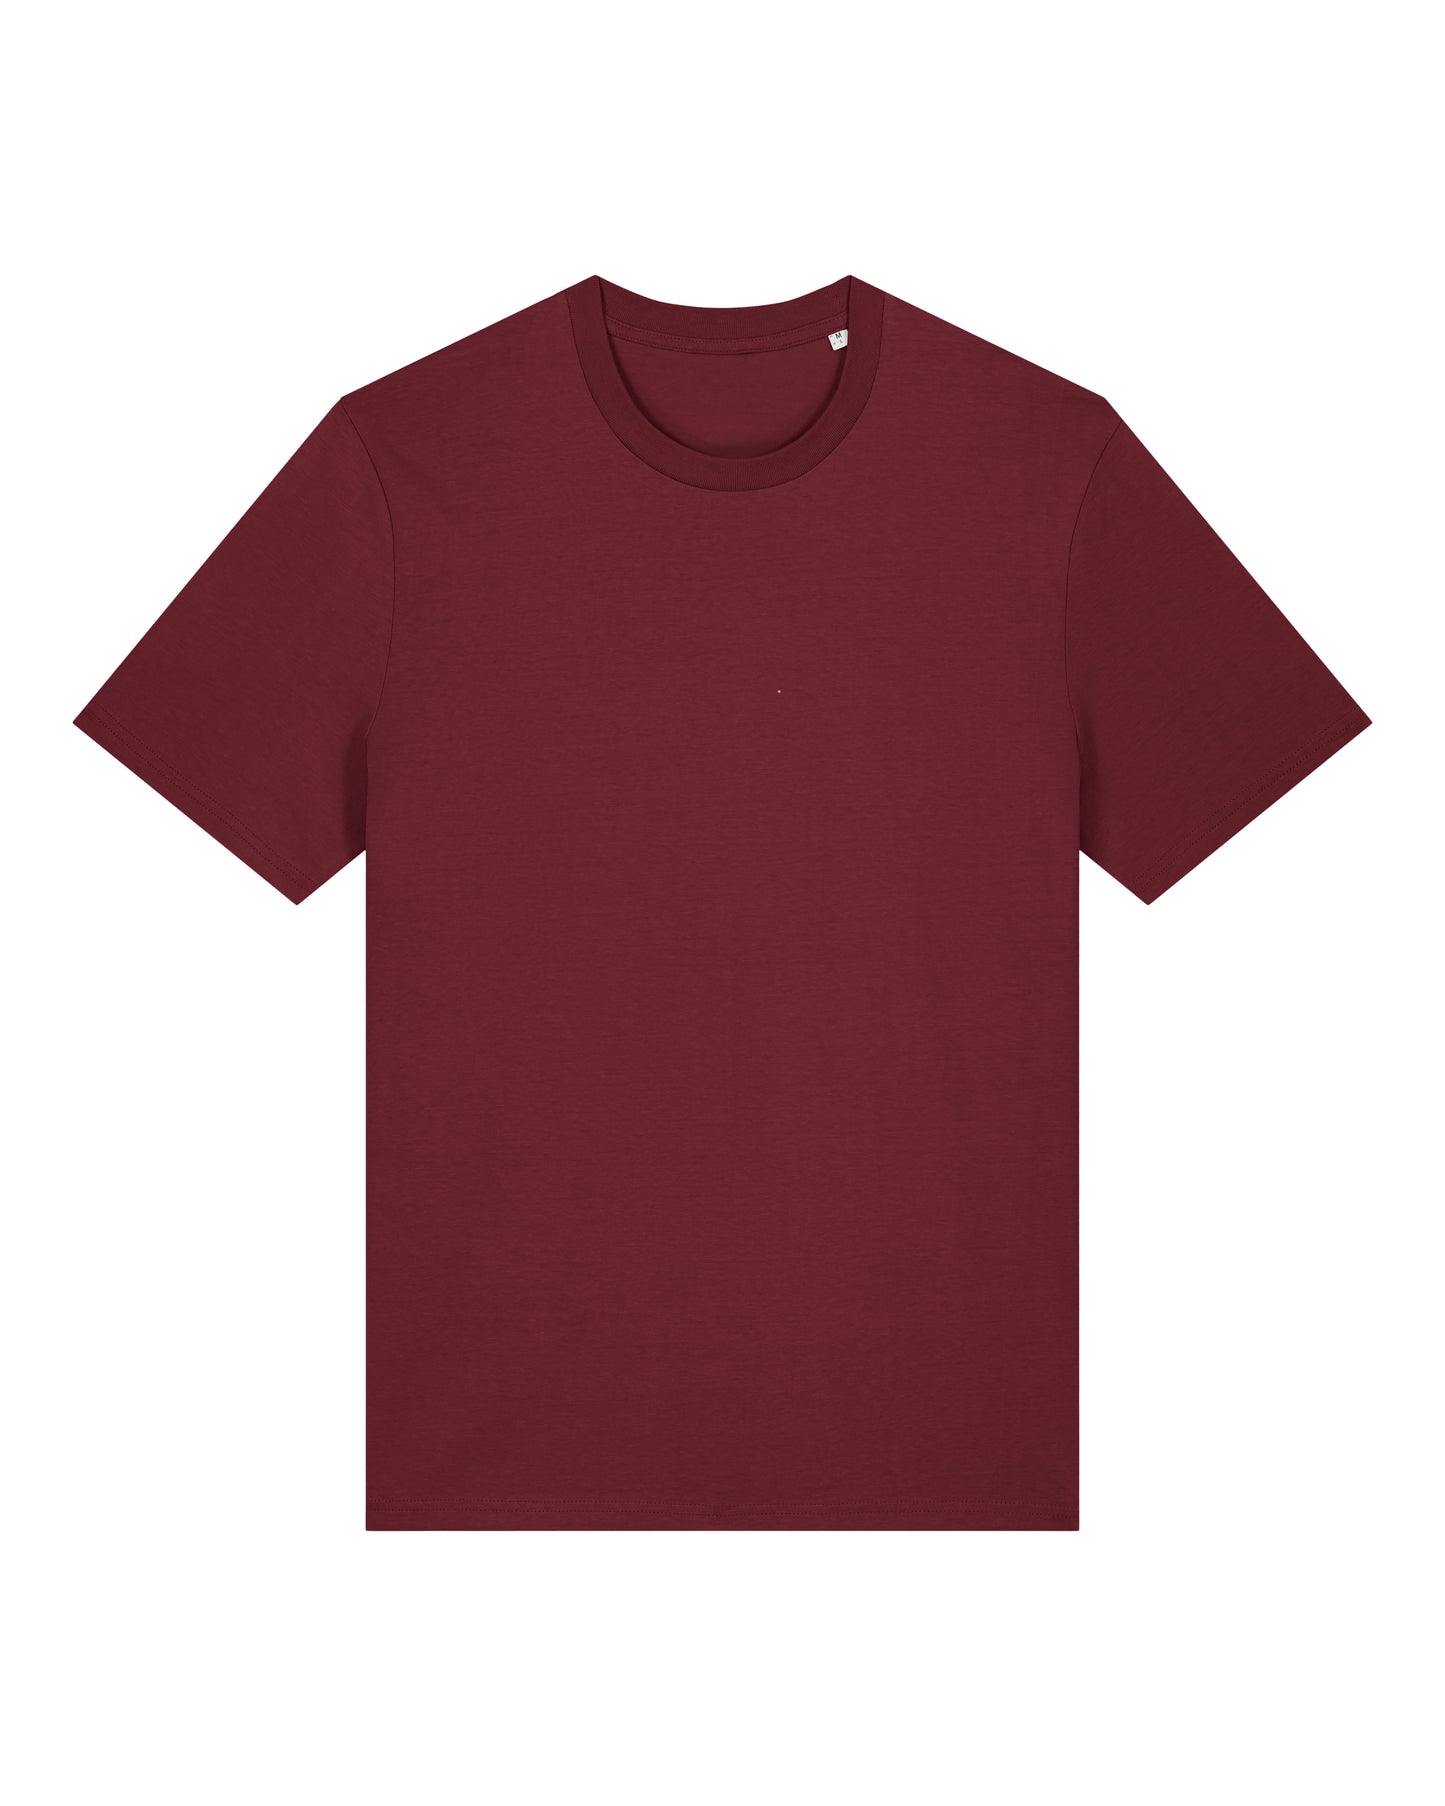 It Fits Player - Unisex Regular Fit T-shirt - Burgundy